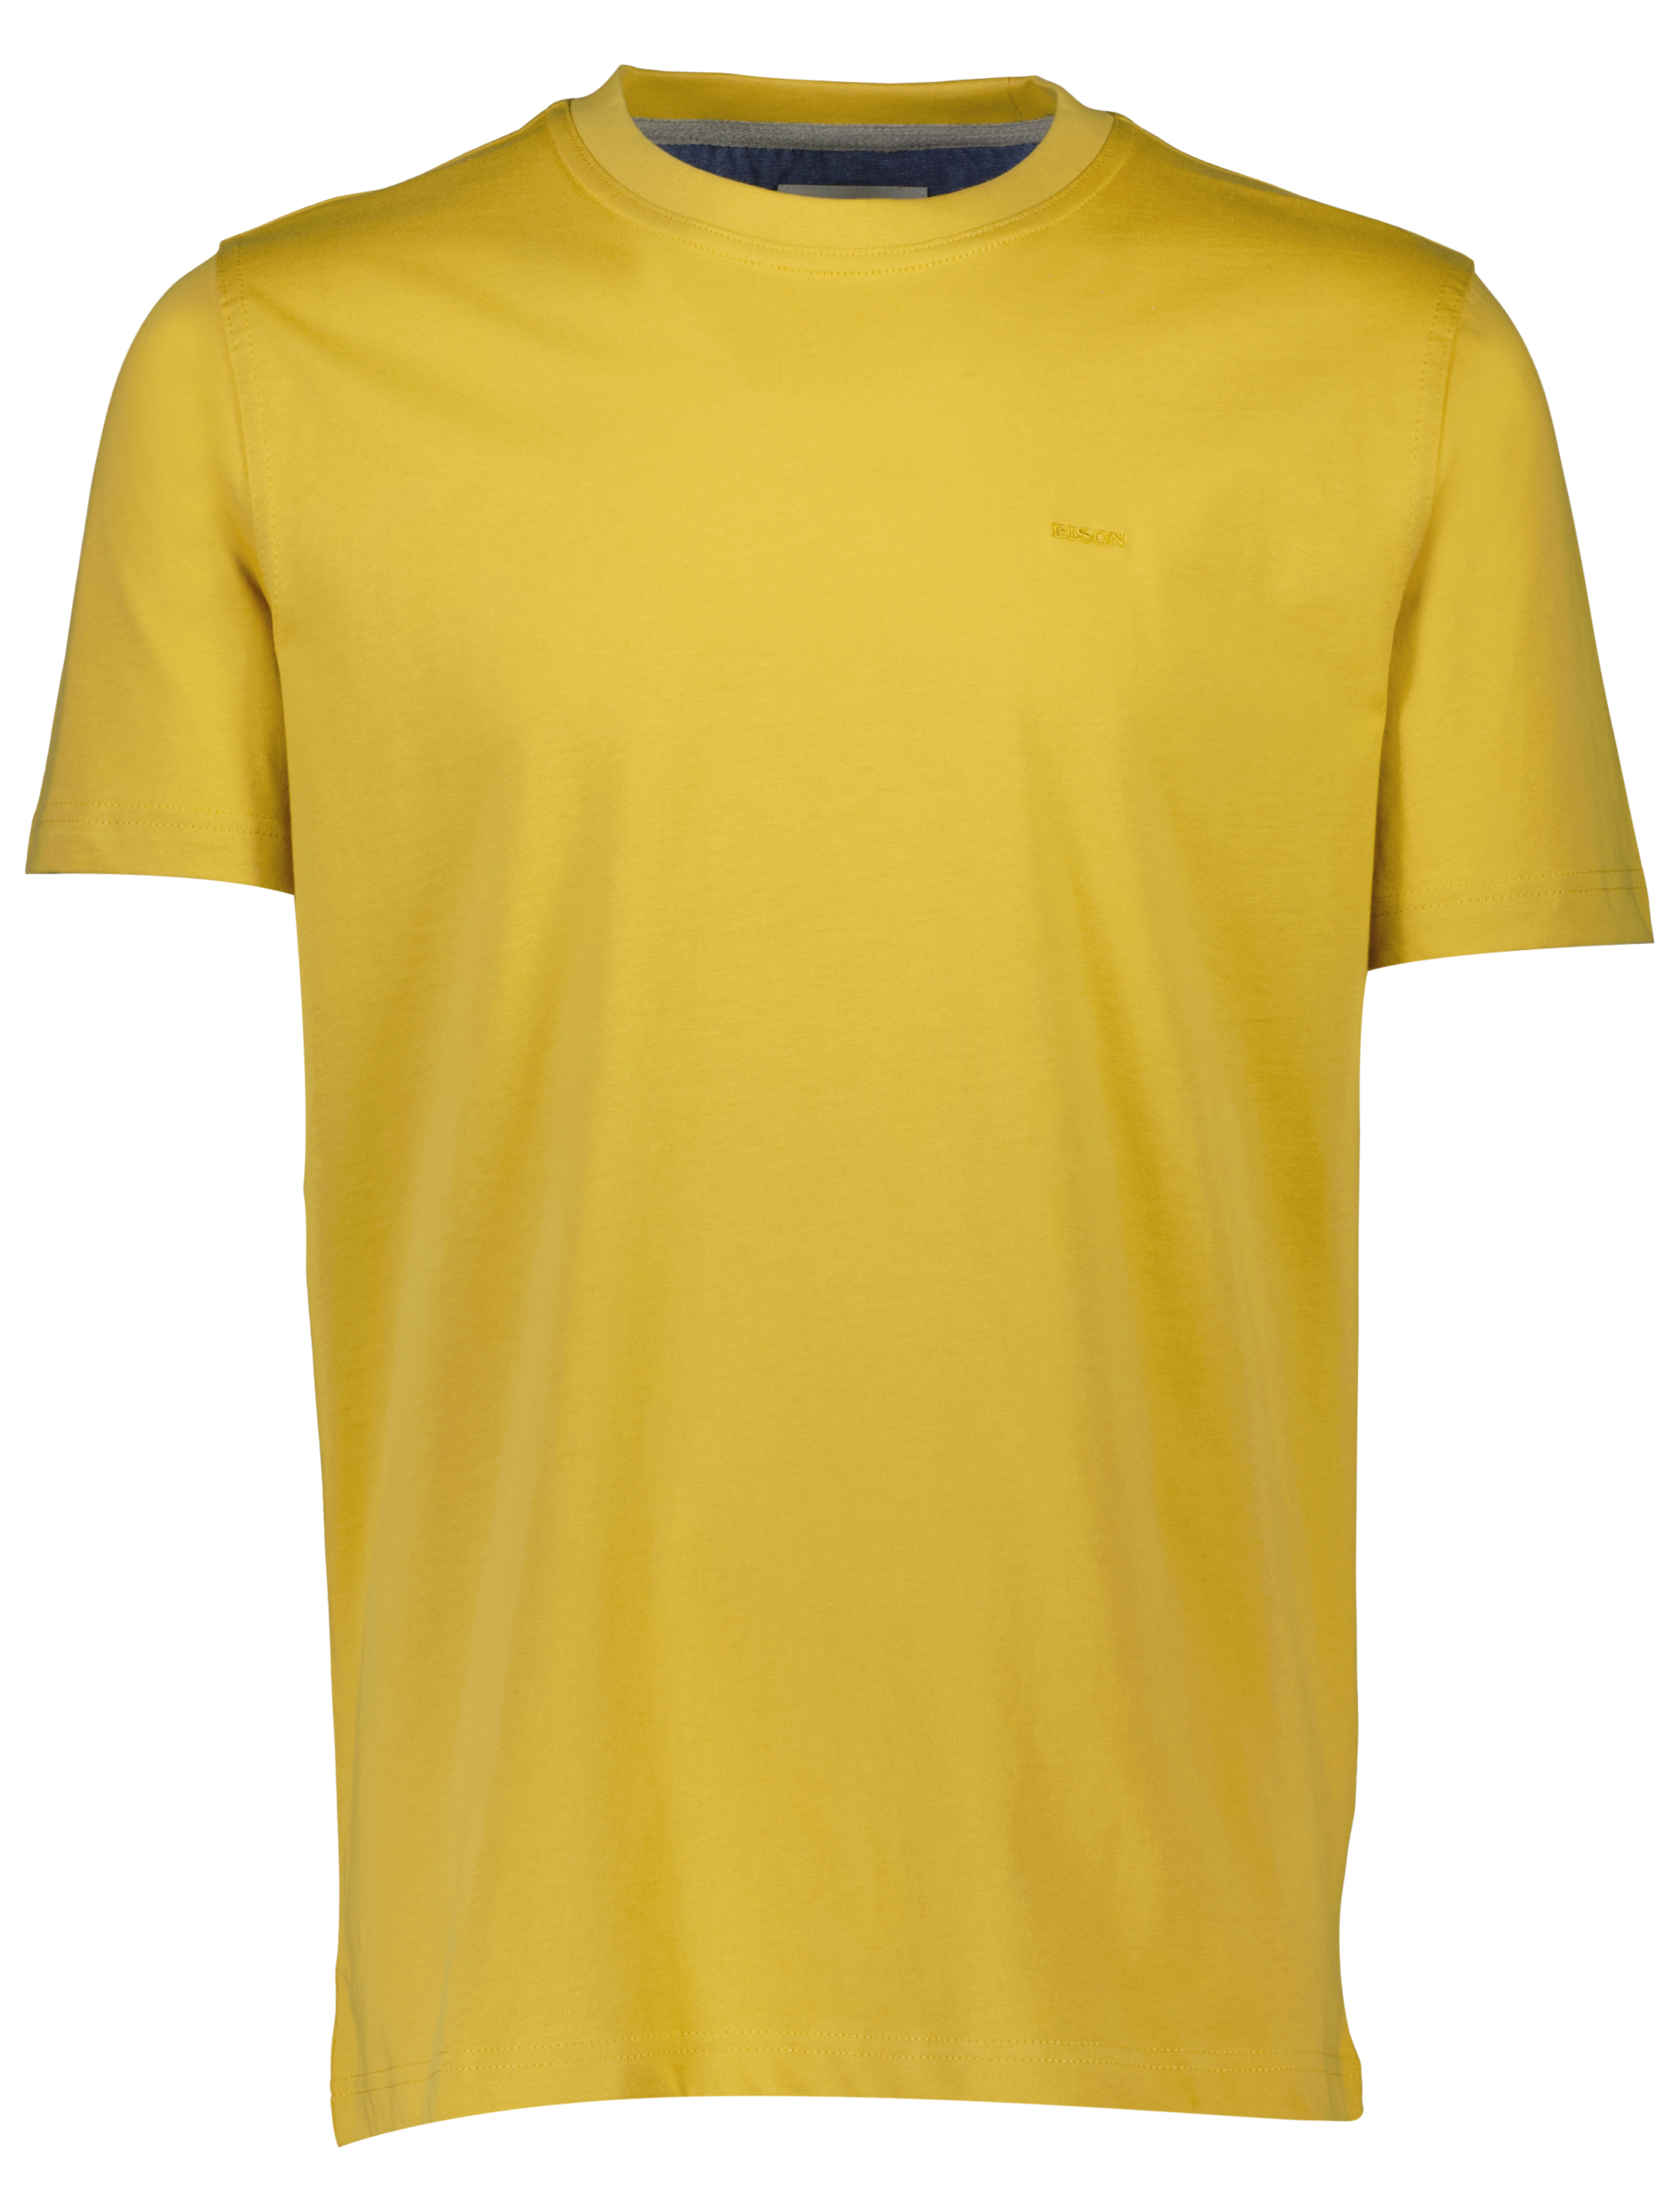 Bison T-shirt gul / yellow 223